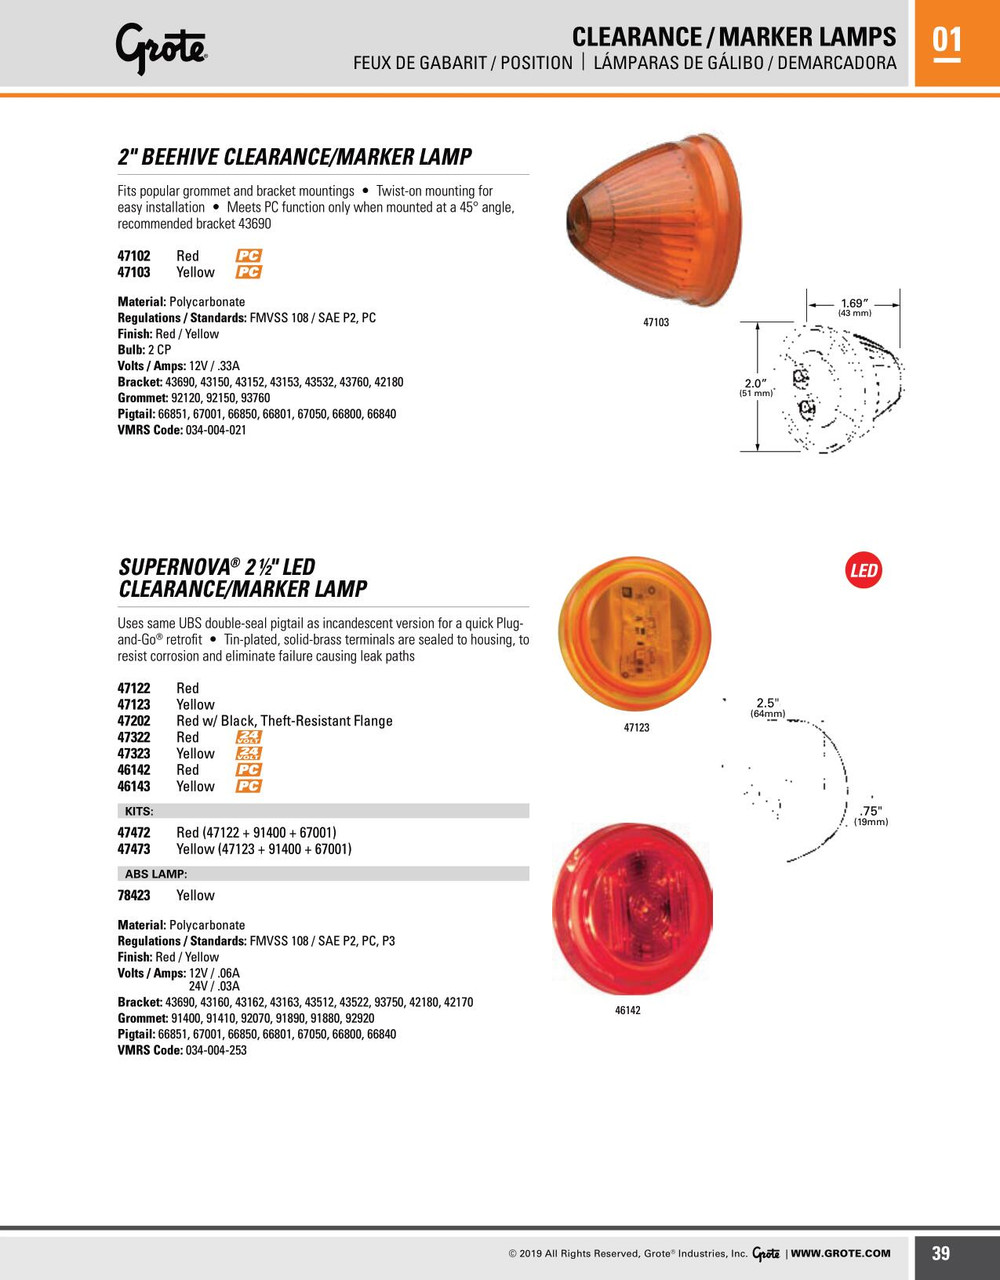 2-1/2" SuperNova® LED Clearance/Marker Lamp - Amber  47323